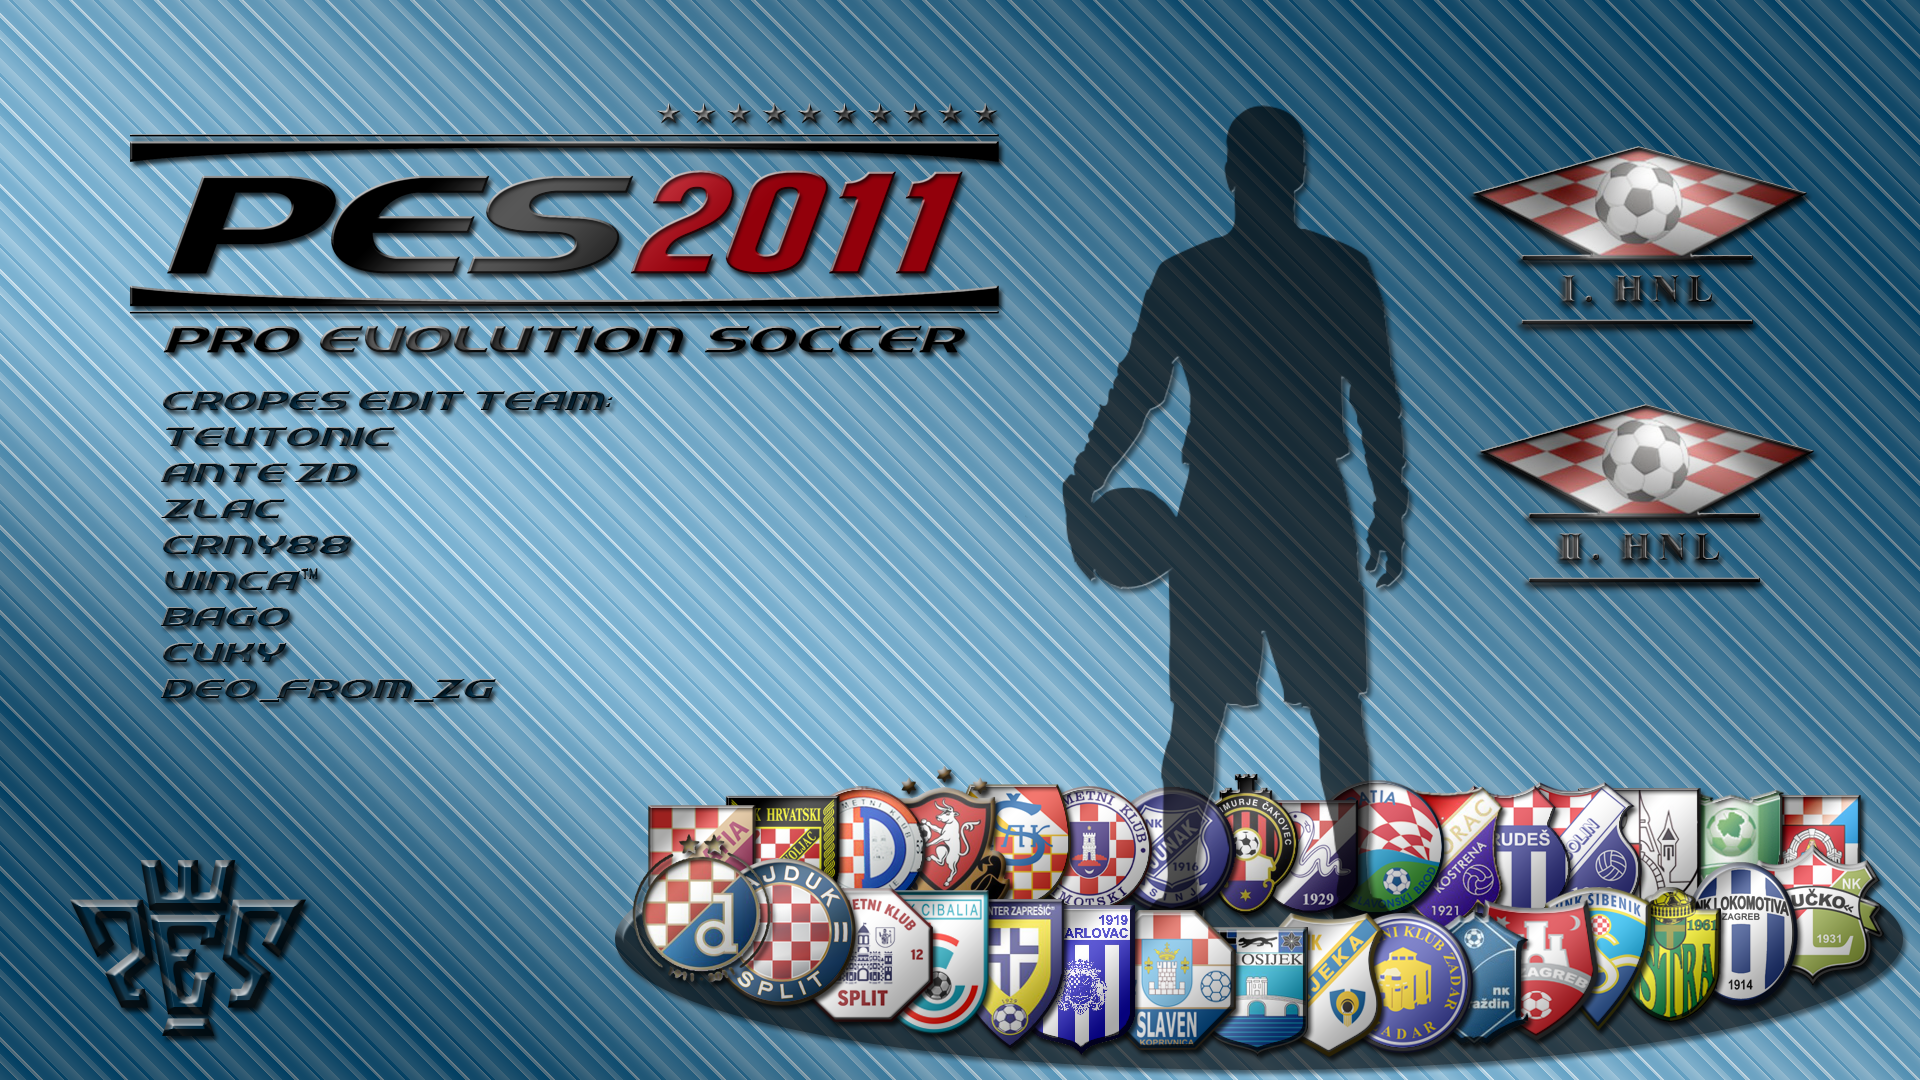 exhibition 4 image - CROPES HNL Patch (for PES 2011) mod for Pro Evolution  Soccer 2011 - Mod DB